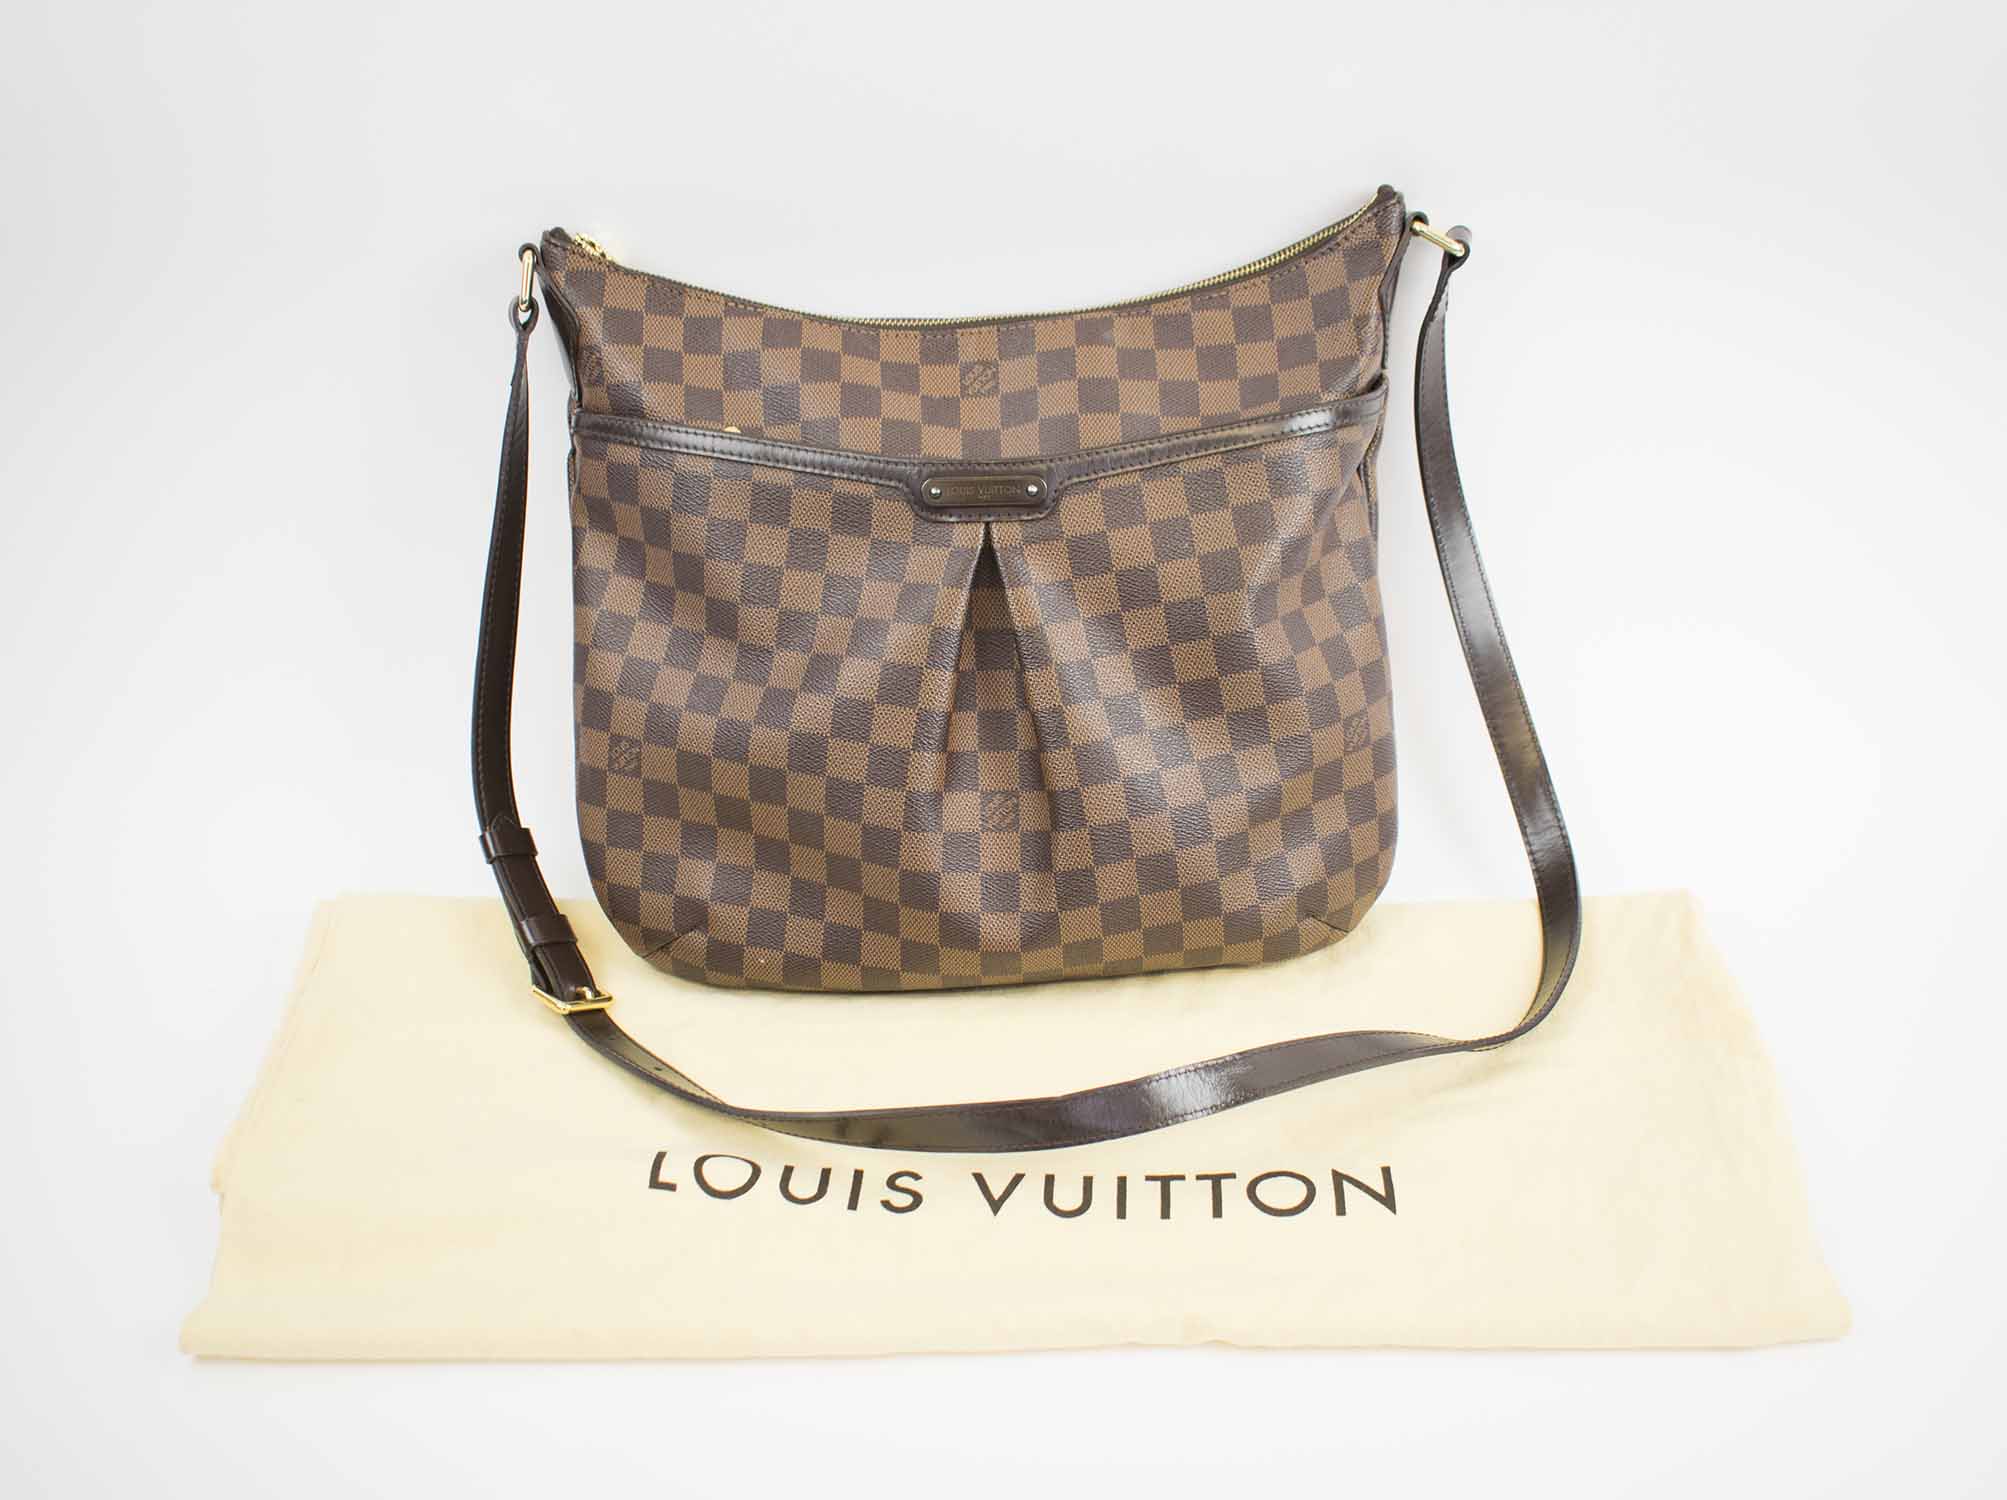 Buy Louis Vuitton Trainer Monagram Bleu Ciel Online in Australia